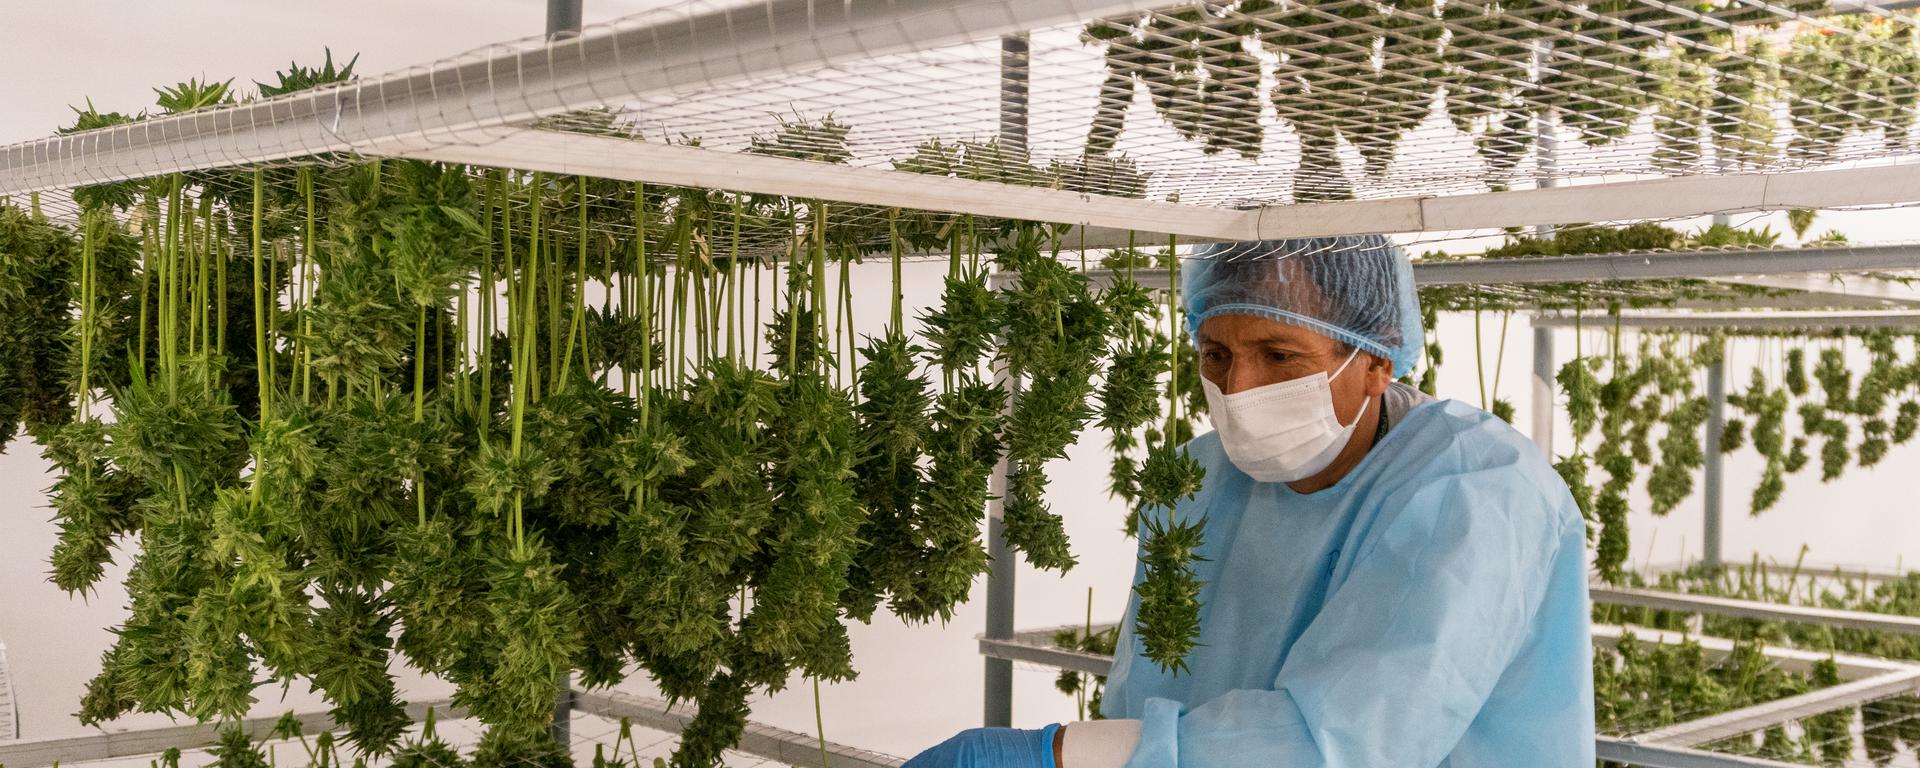 Así se cultiva cannabis legal en Perú a escala industrial 